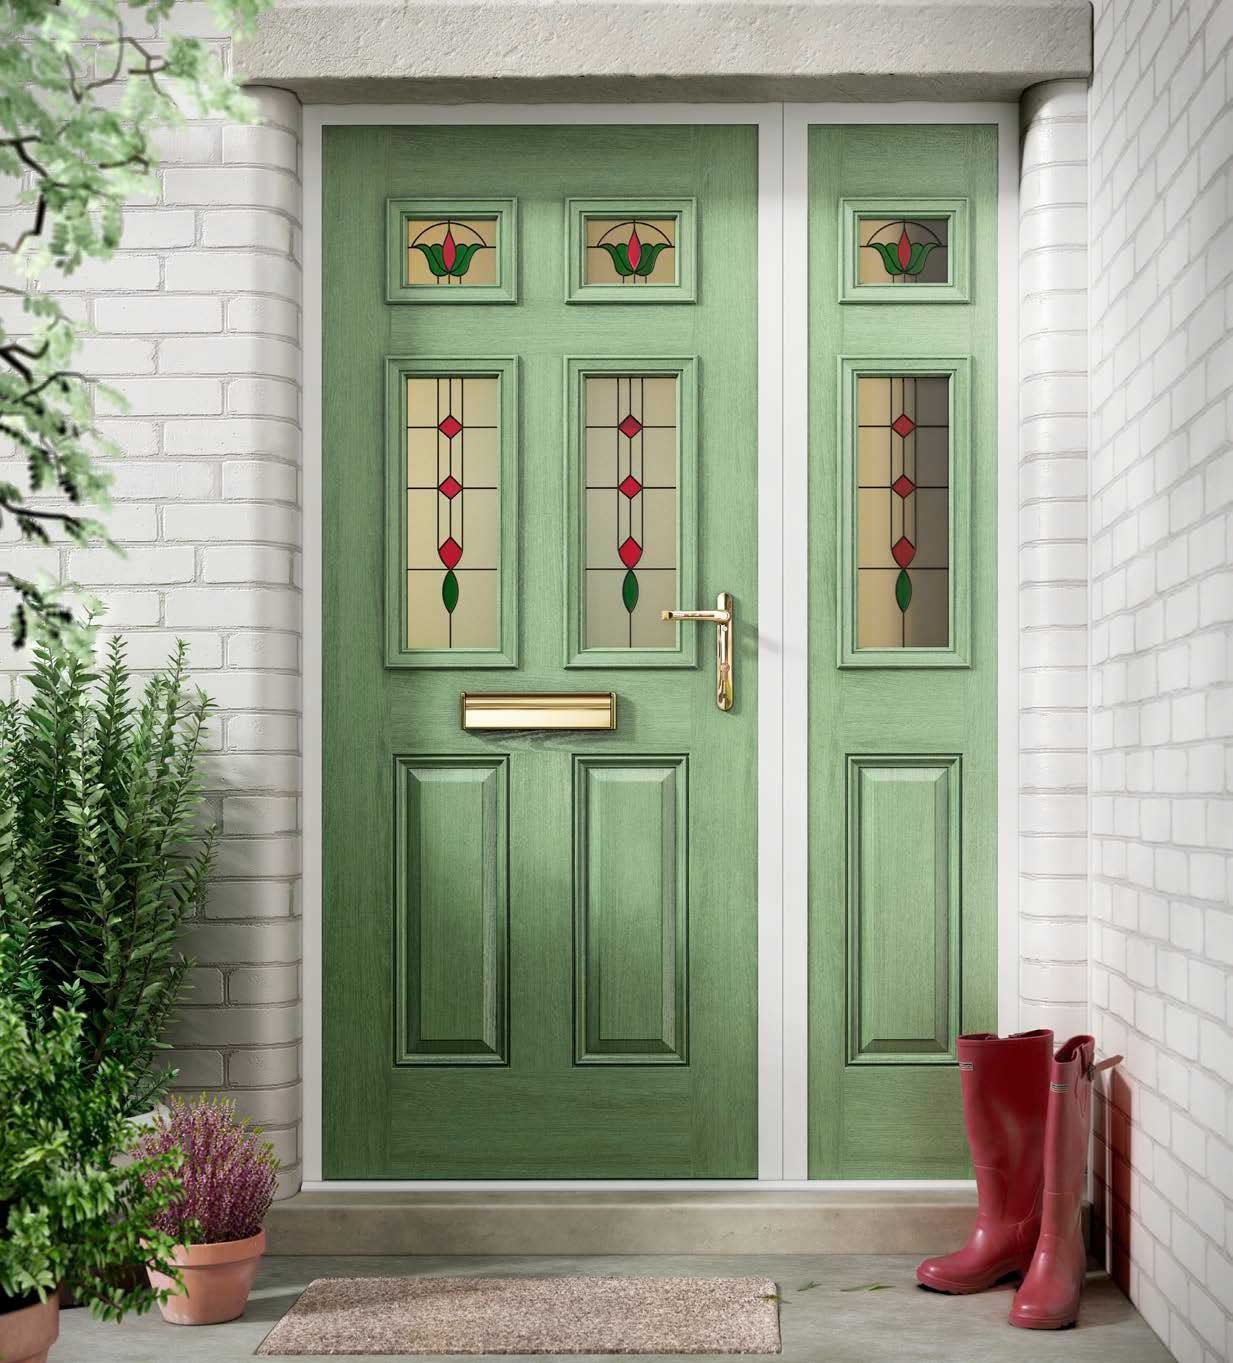 Solidor green door with wellies outside